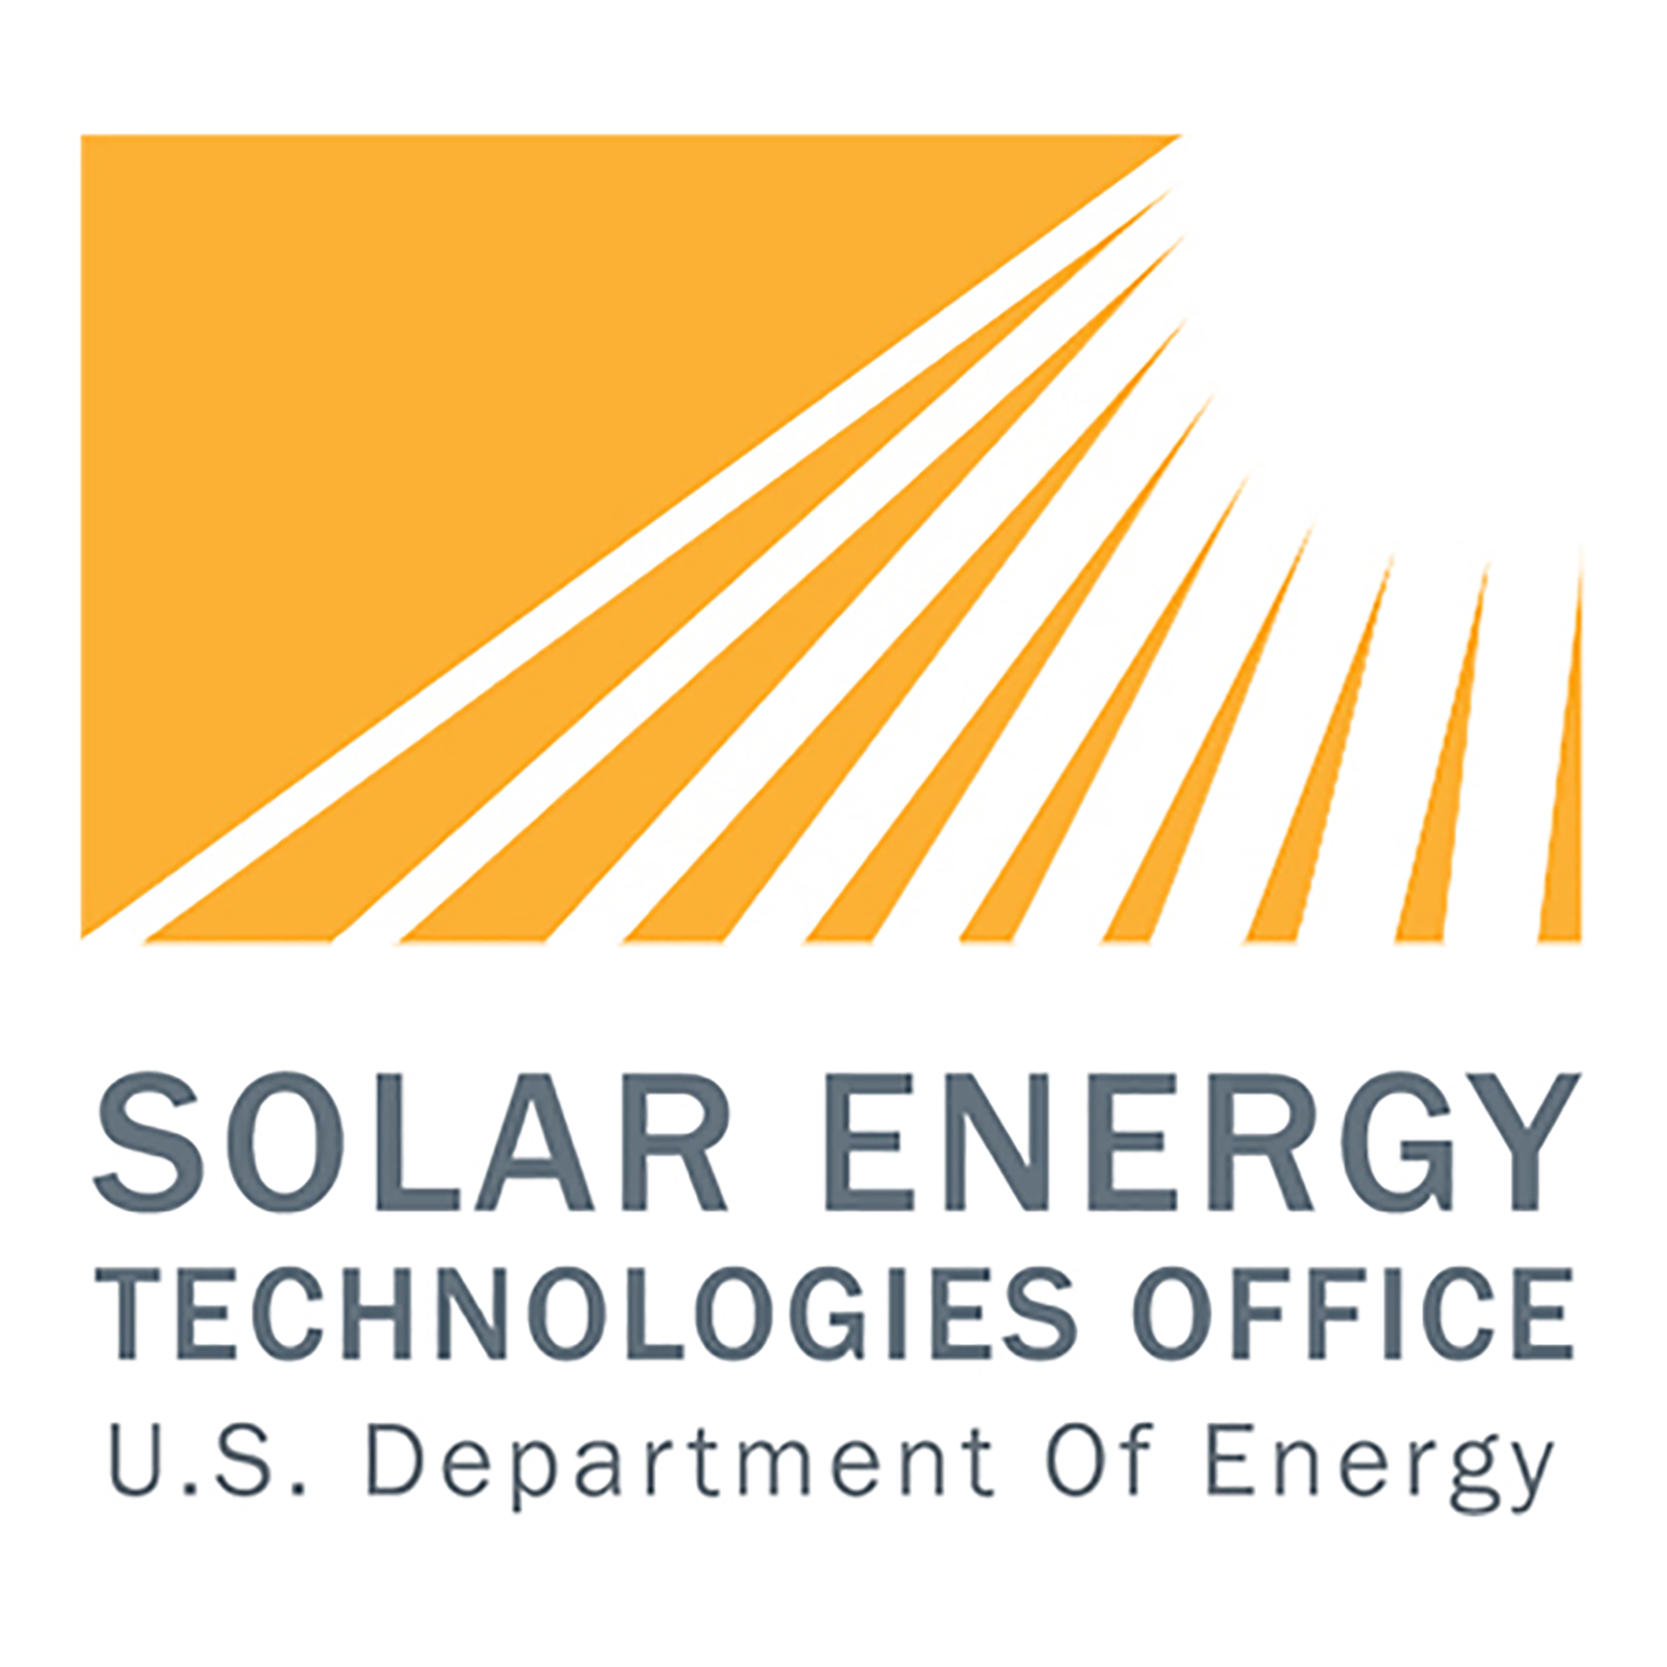 Solar Energy Technology Office U.S. Department of Energy